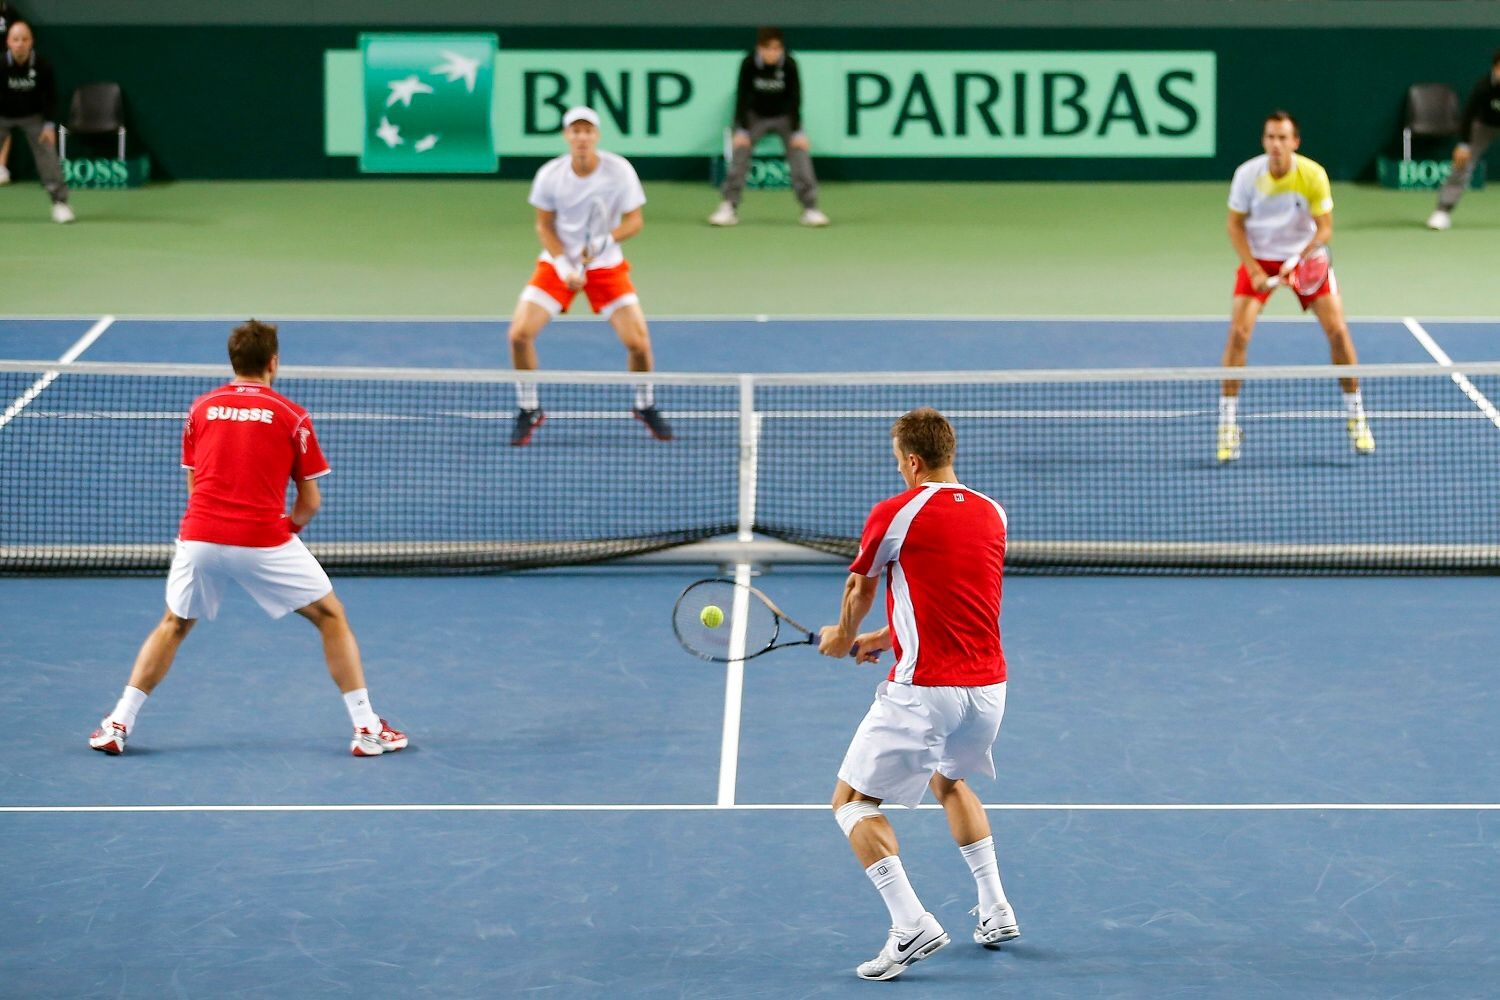 Davis Cup, Švýcarsko - Česko: Stanislas Wawrinka, Marco Chiudinelli - Toáš Berdych, Lukáš Rosol